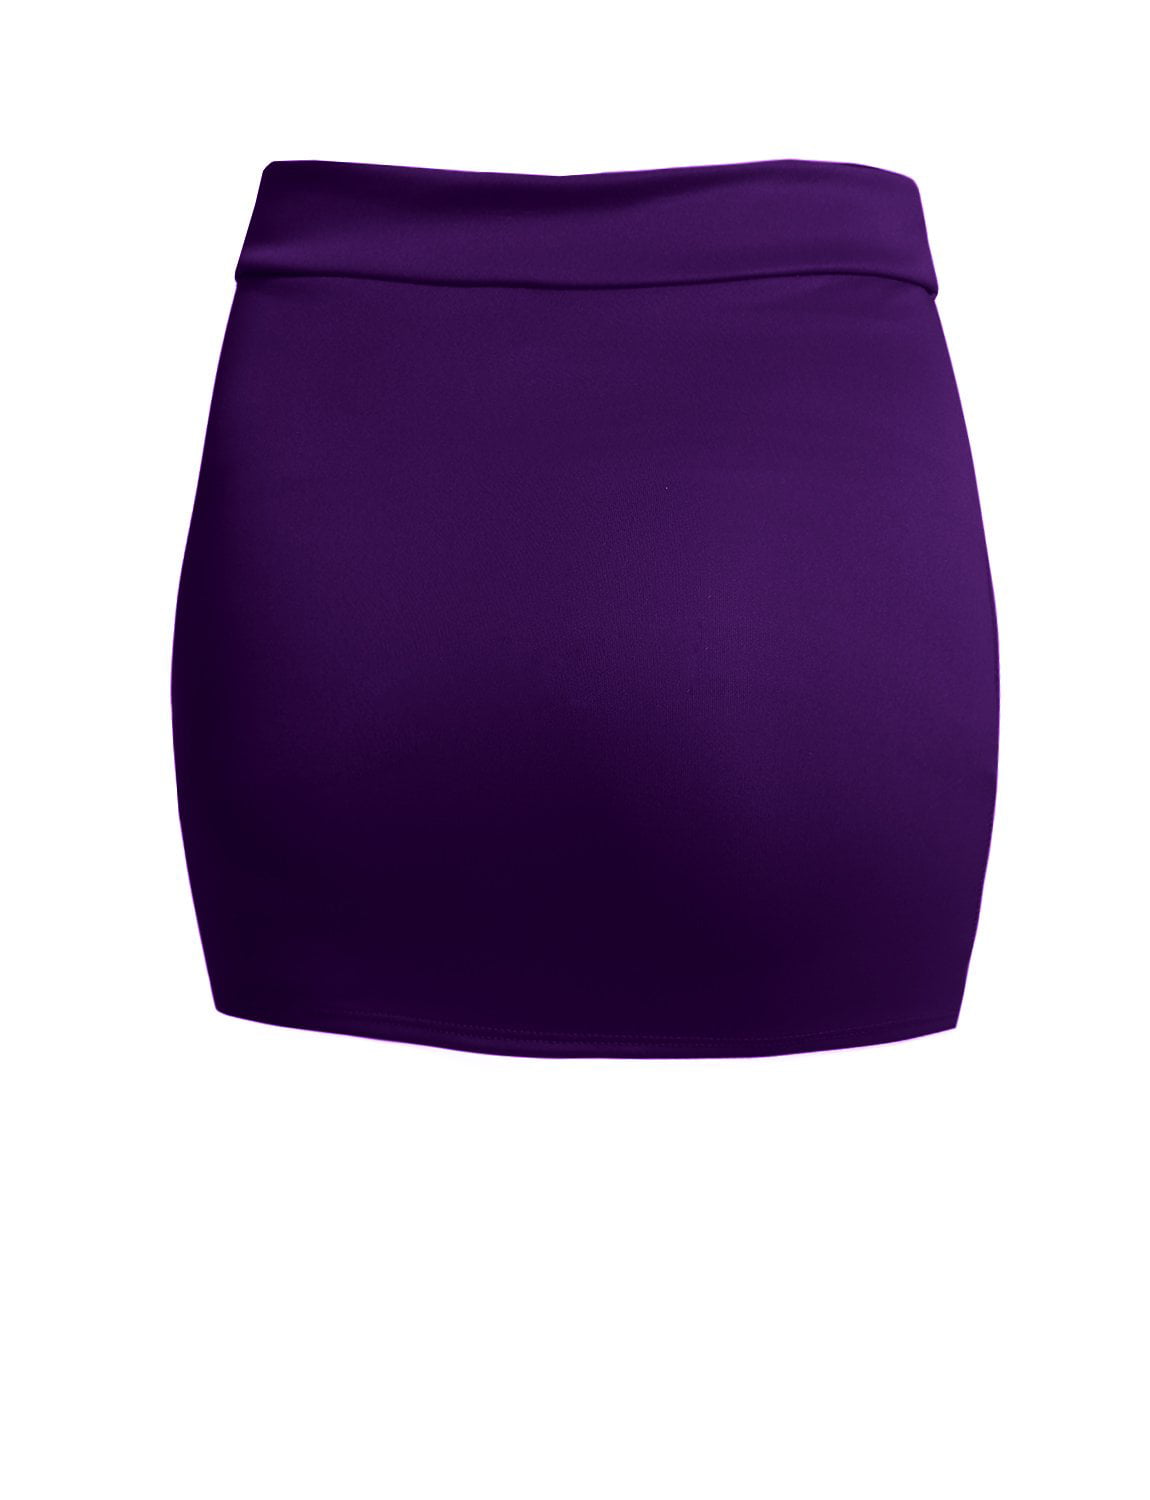 Buy Purple Skirts for Women by POPWINGS Online | Ajio.com